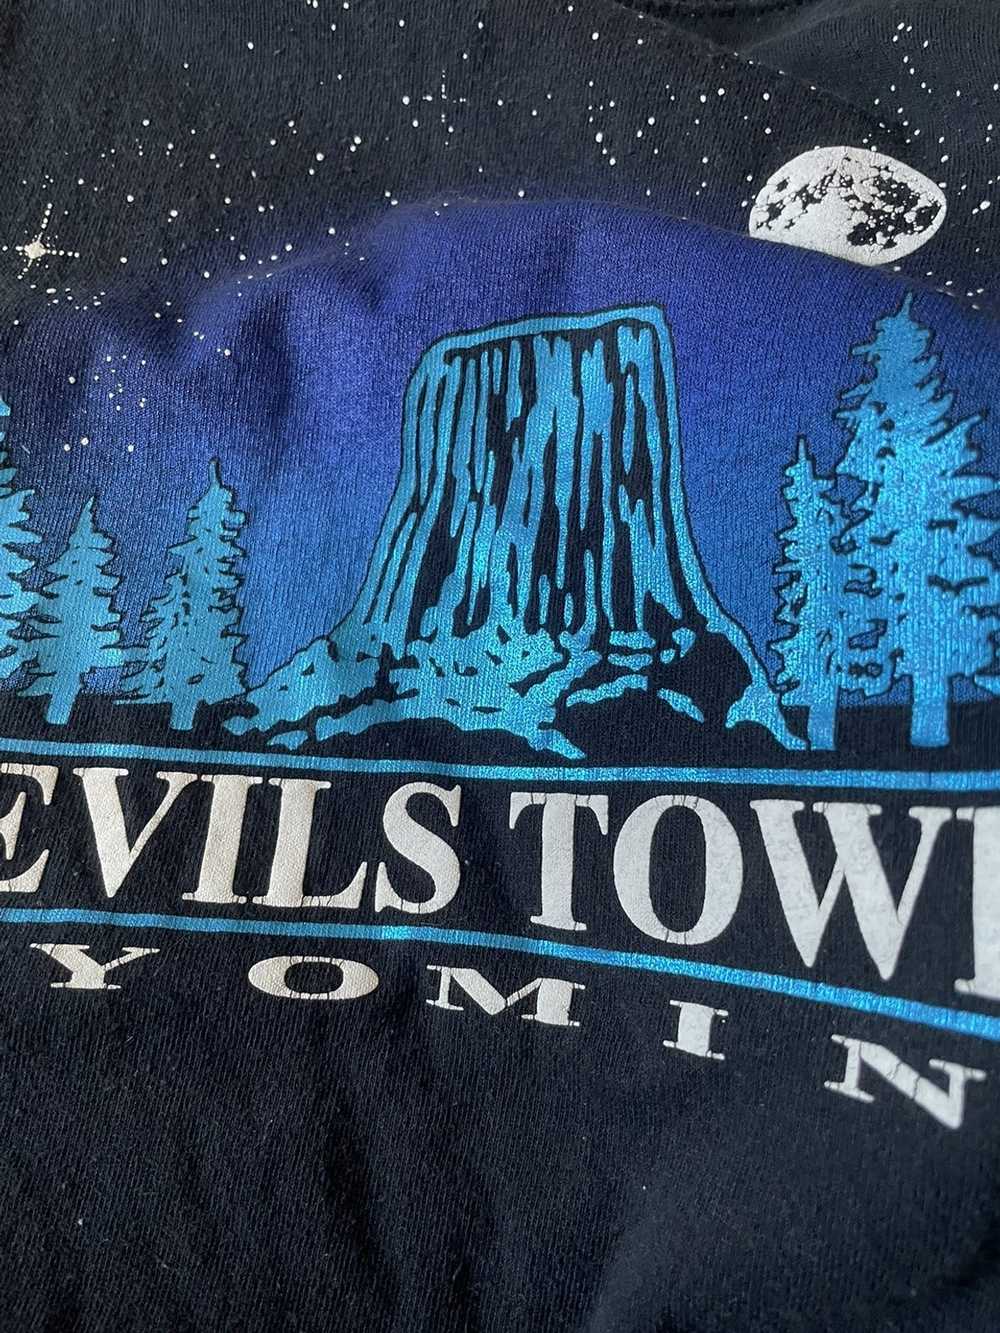 Vintage Vintage Devils Tower Wyoming Black T Shirt - image 4